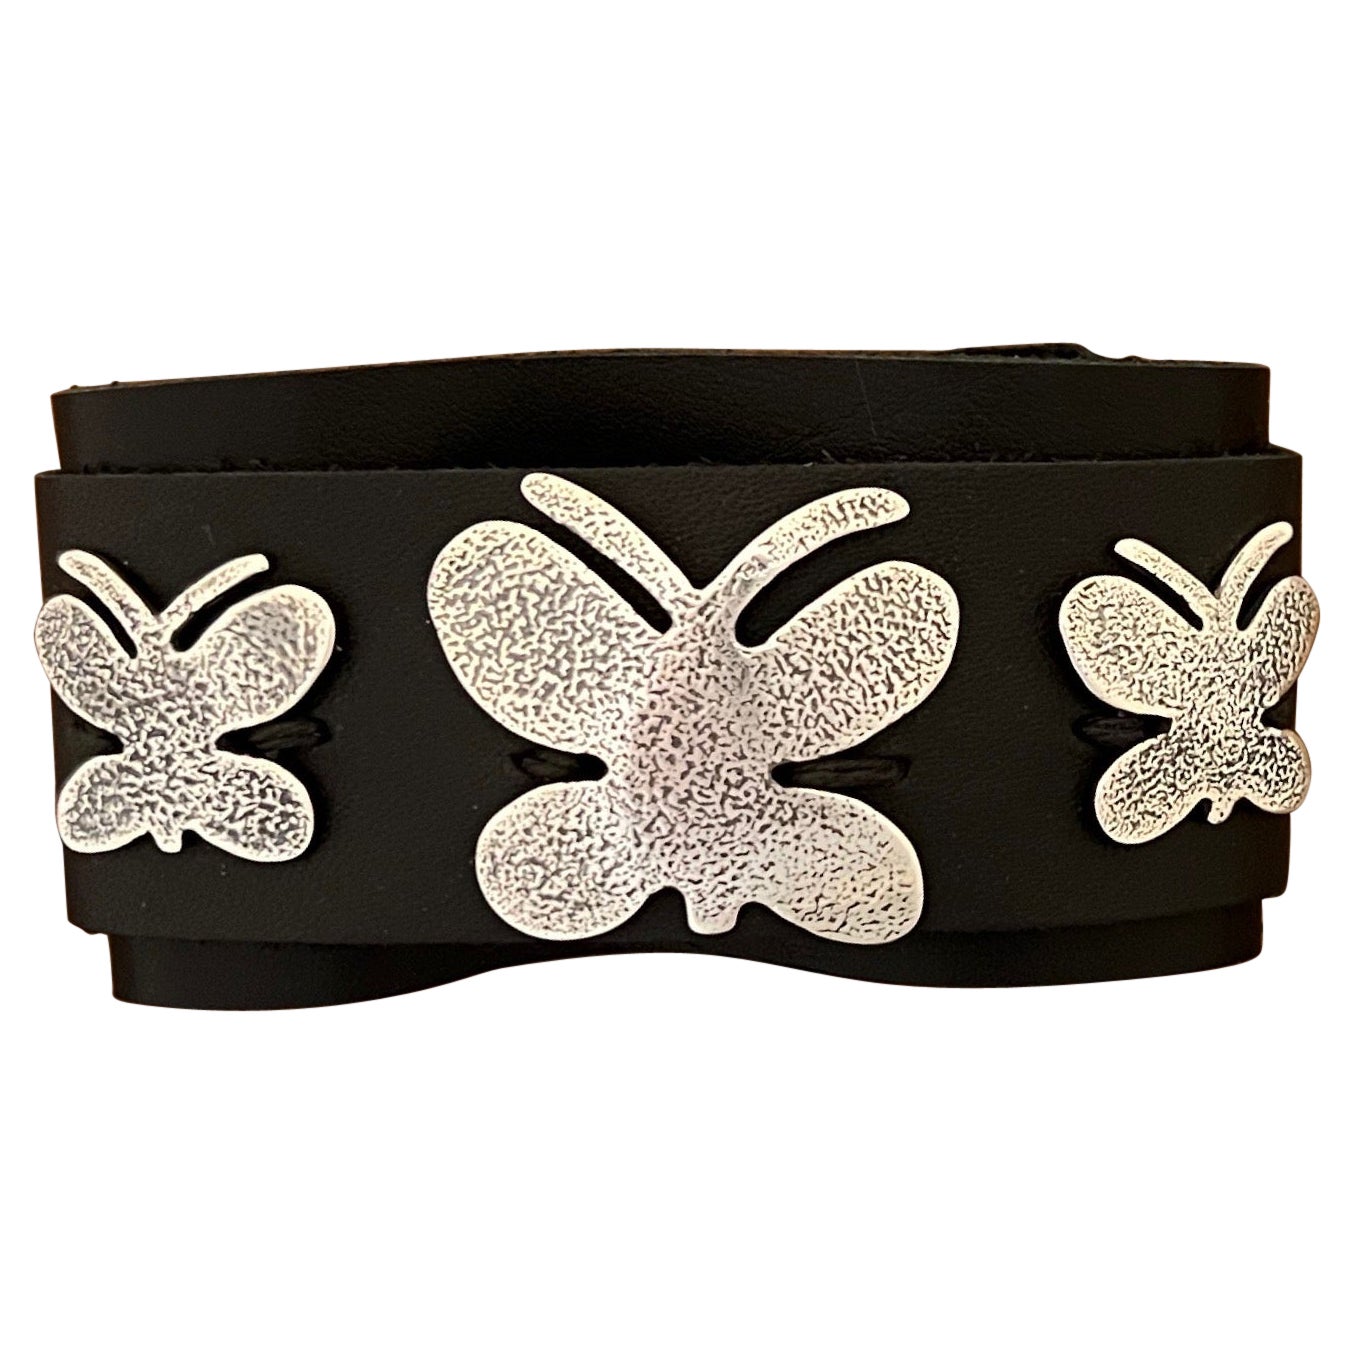 Adjustable Textured Butterfly leather cuff by Melanie Yazzie